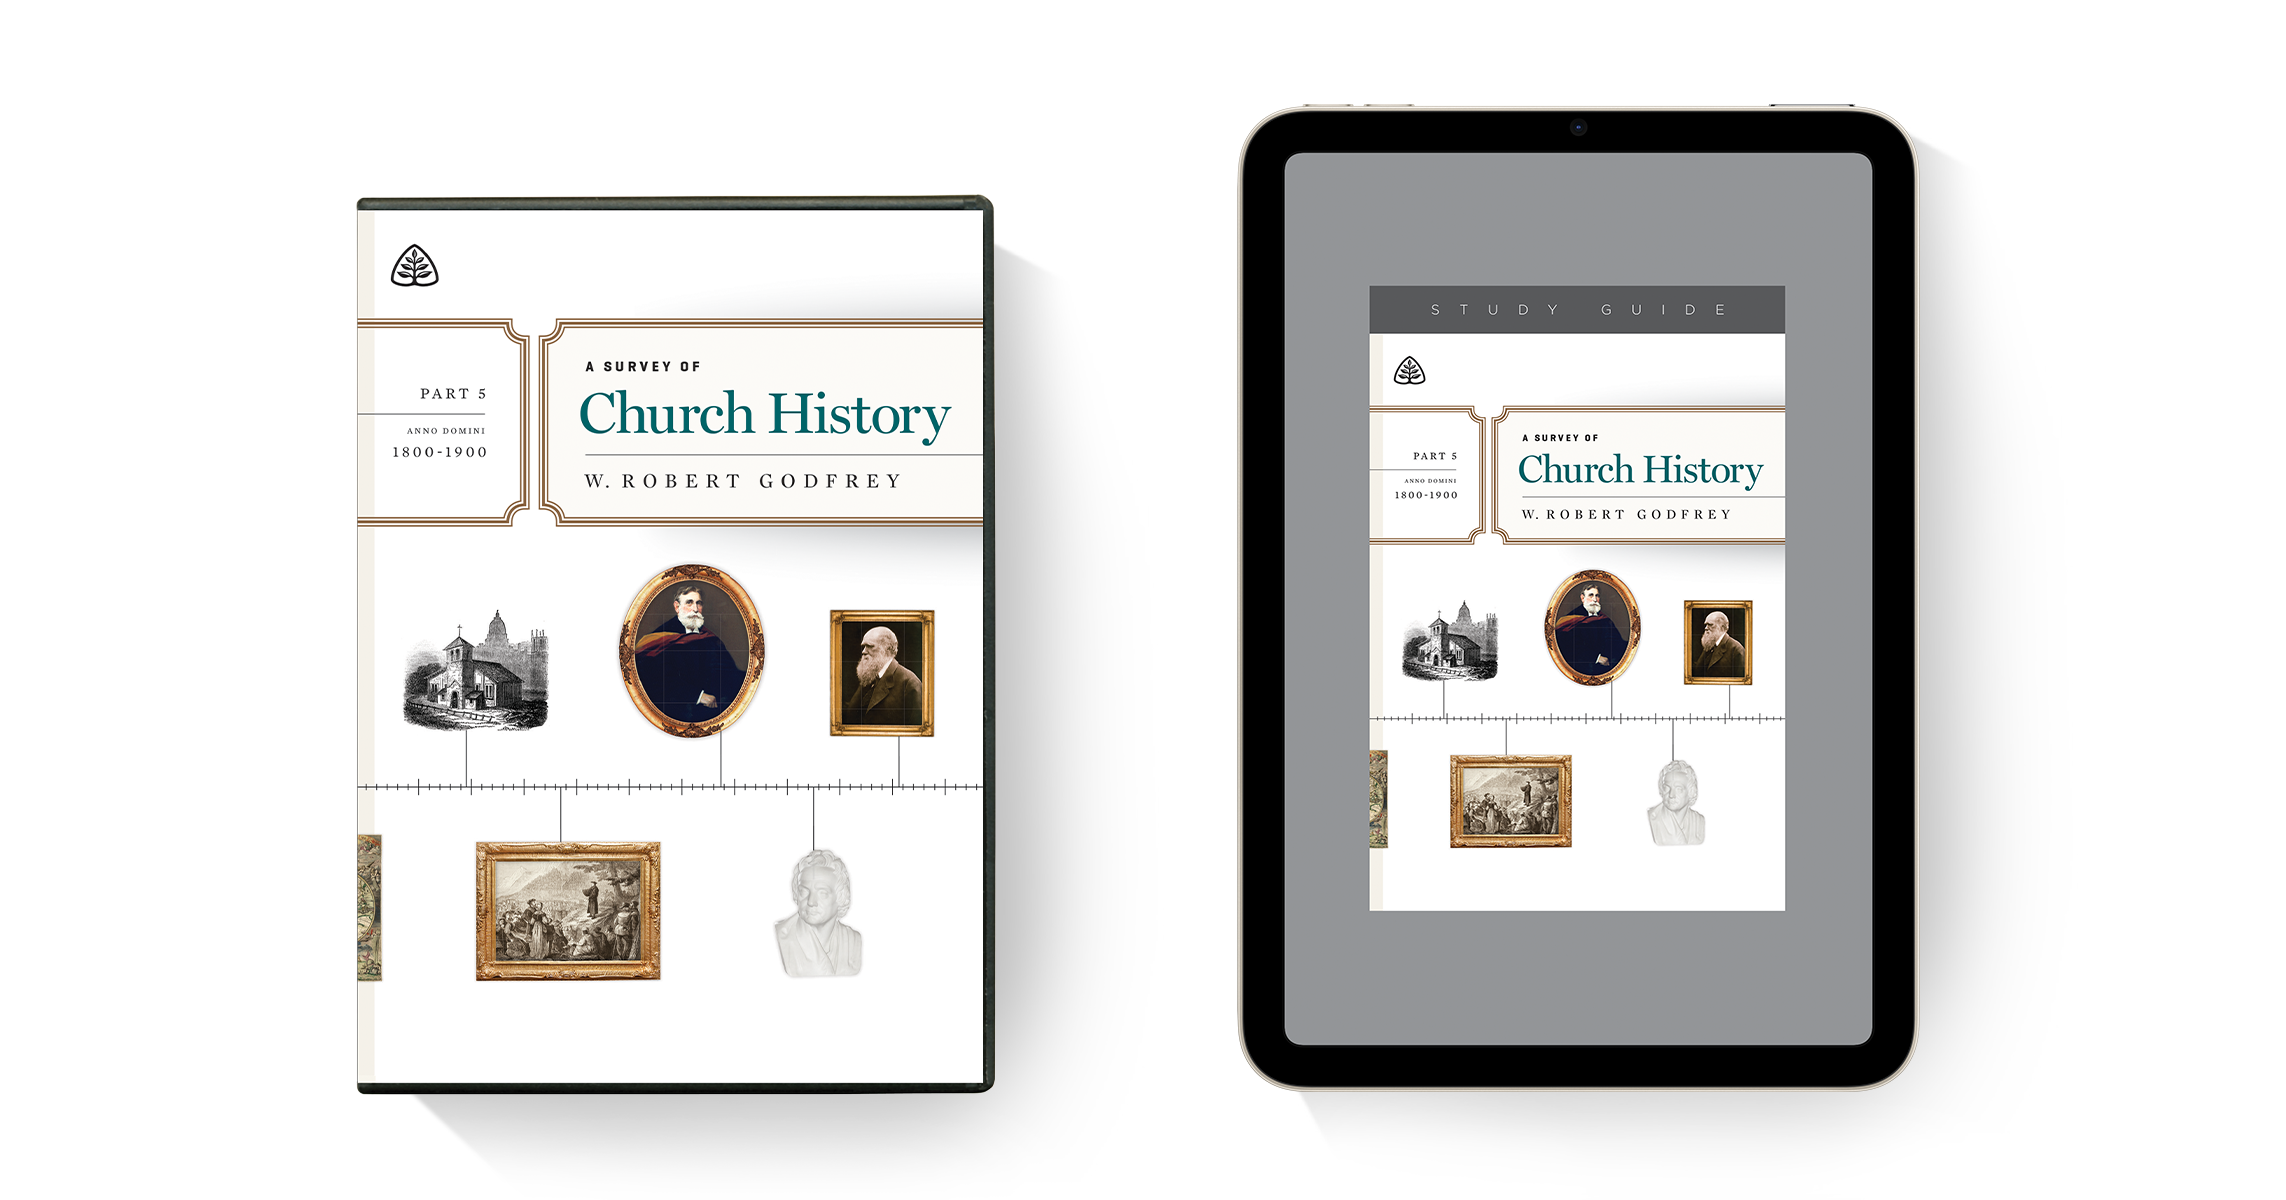 A Survey of Church History, Part 5 A.D. 1800-1900